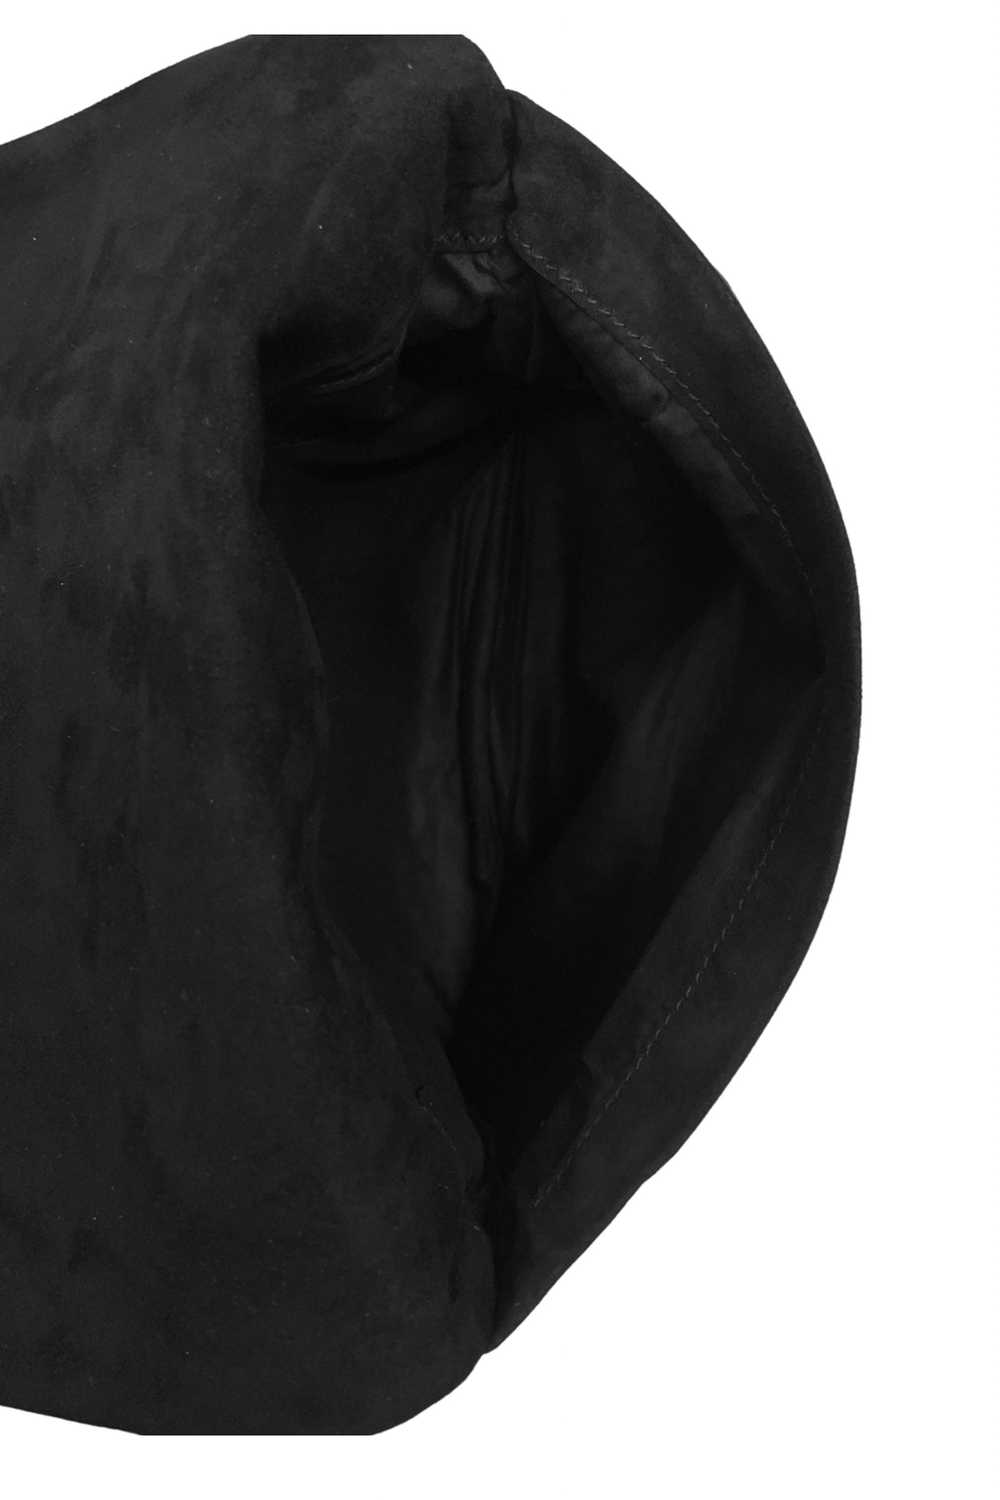 HELMUT LANG BLACK SUEDE FOLD OVER CLUTCH BAG WITH… - image 4